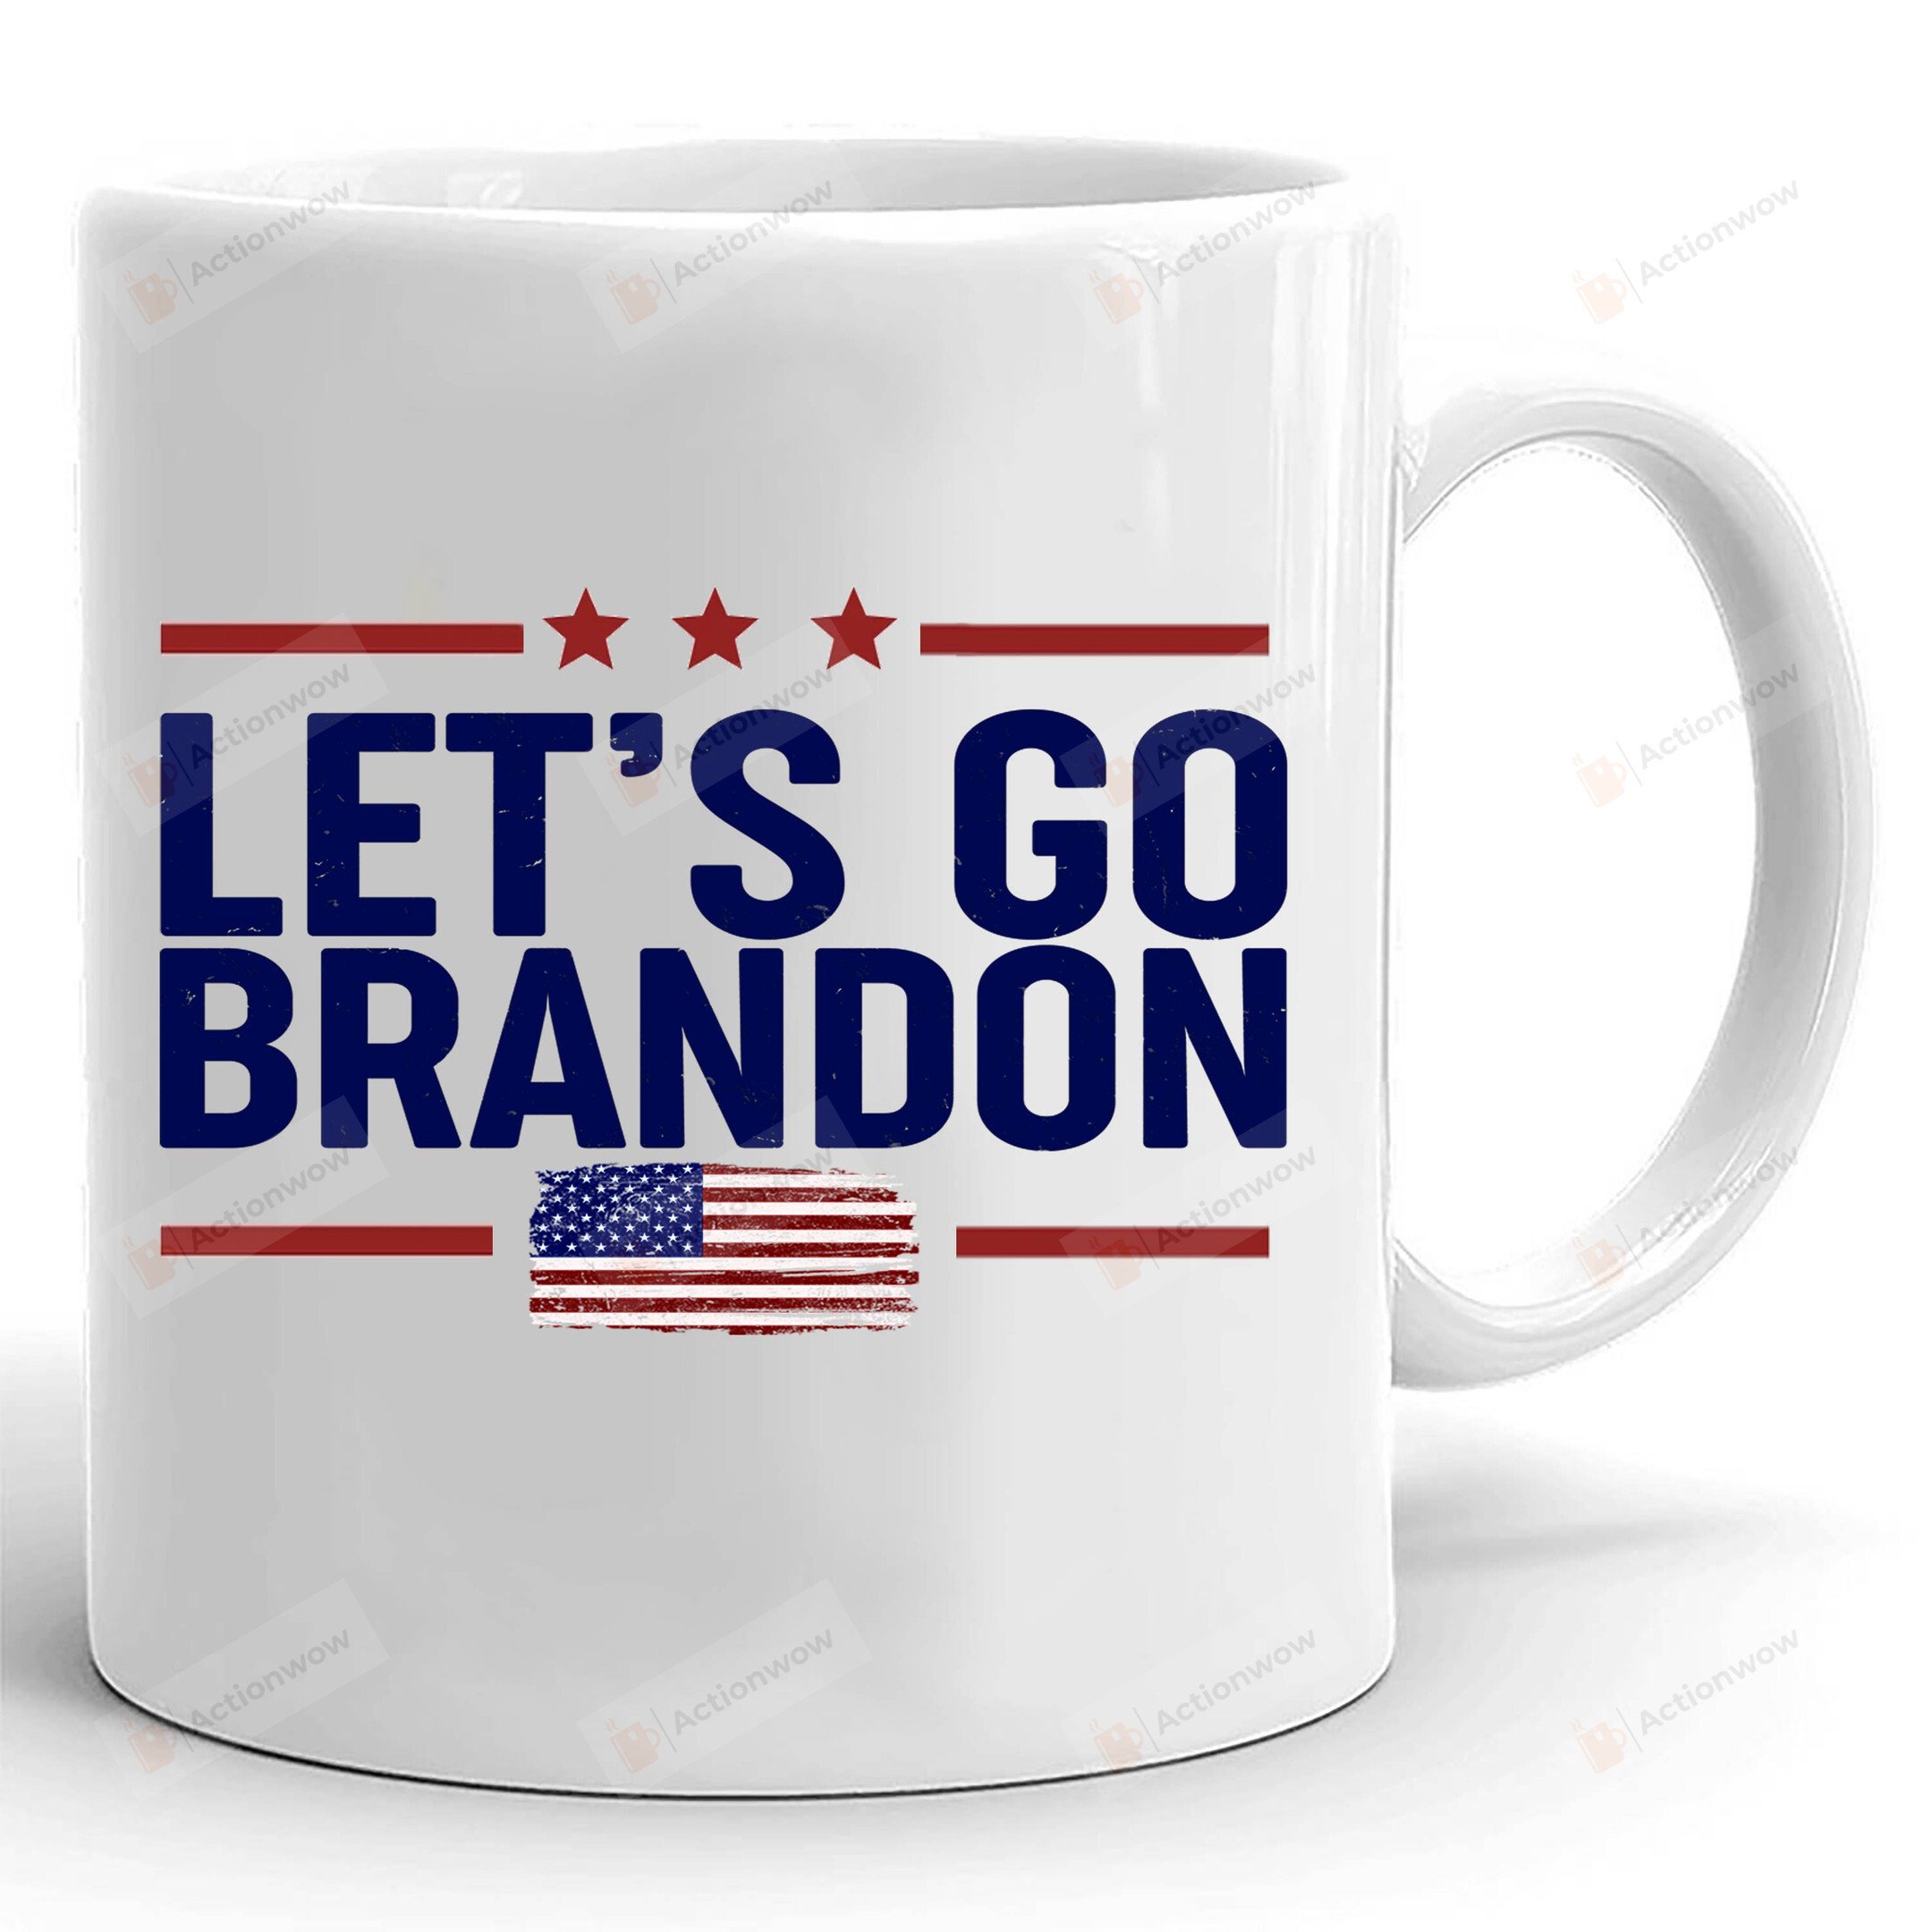 Let's Go Brandon Mug, Fjb Mug, Funny Joe Biden, Republican Mug, Anti Biden, Joe Biden Chant, Republican Gifts, Conservative Mug